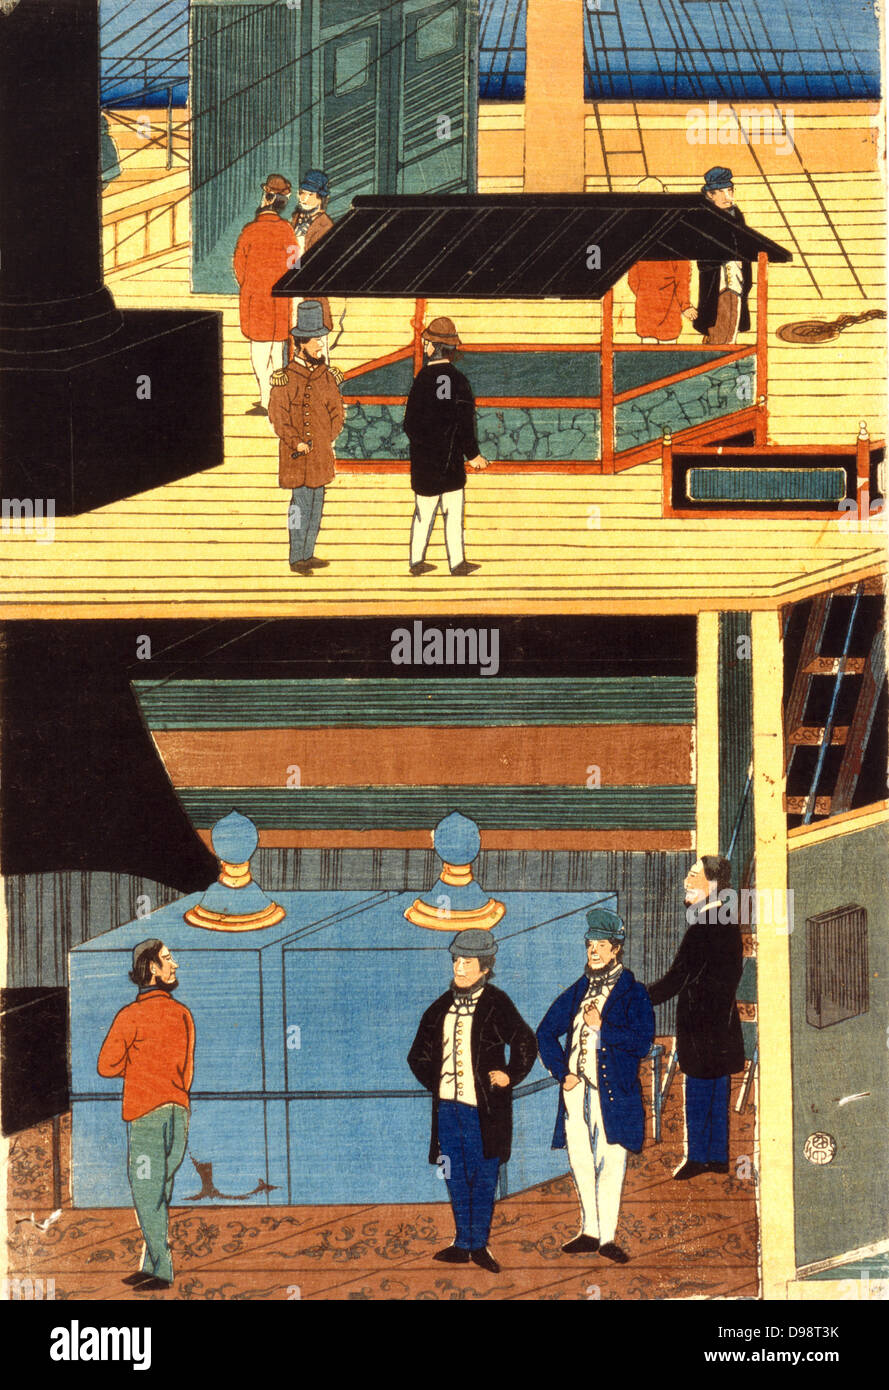 Cross-section of a European ship showing men in European dress on deck, top, and men on the lower deck: Yokahama, Japan, 1861. Utagawa Yoshikazu (active c1850-1870) Japanese artist. Commerce Trade Merchant Stock Photo